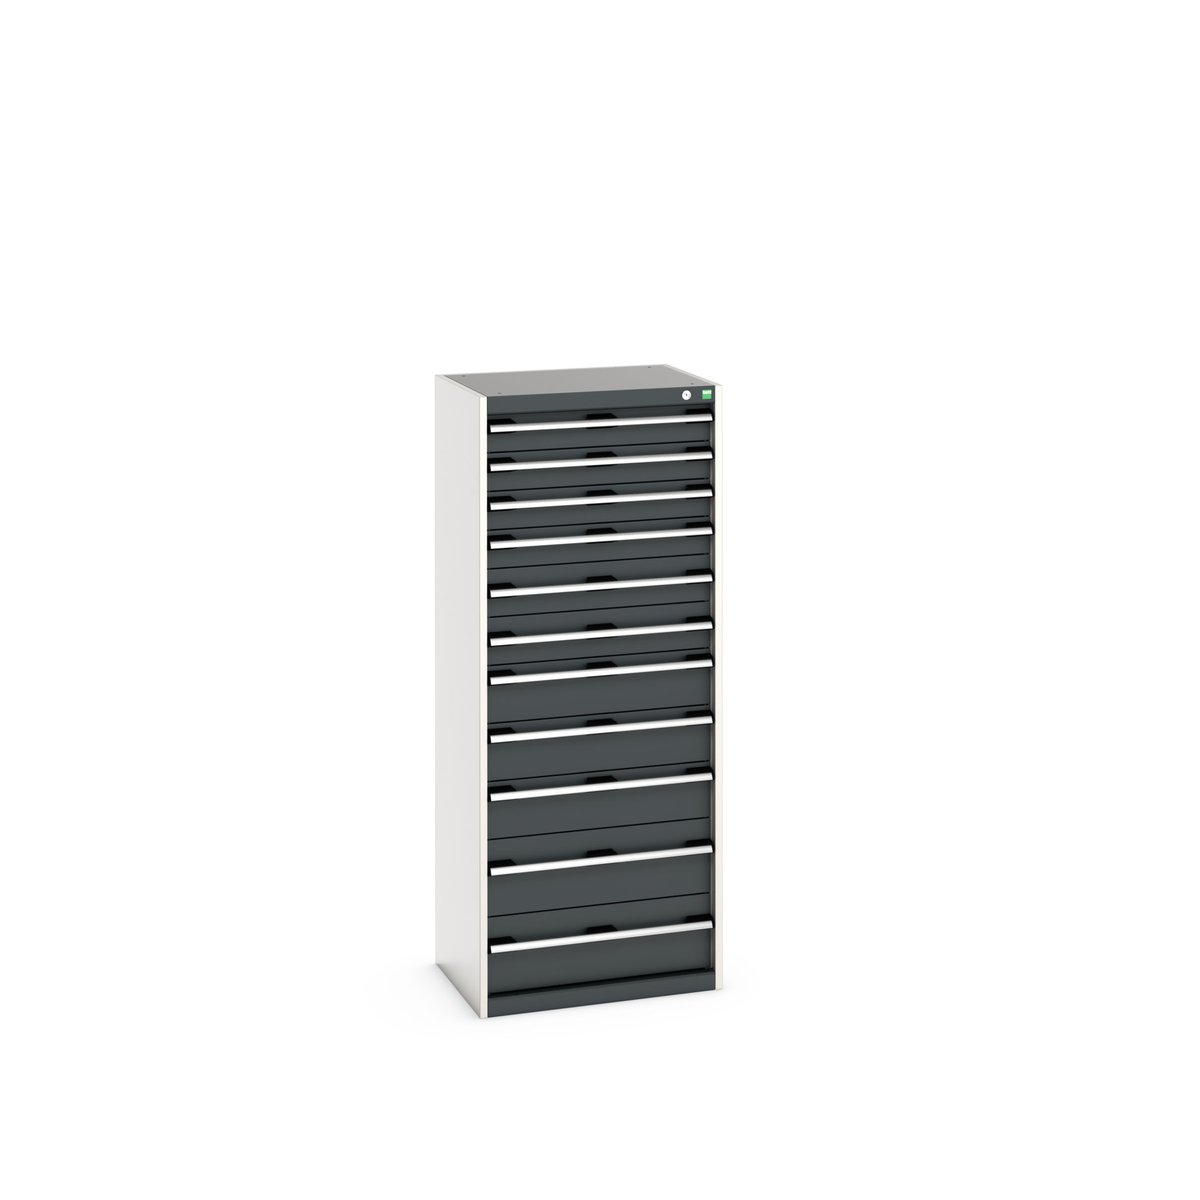 40011067. - cubio drawer cabinet